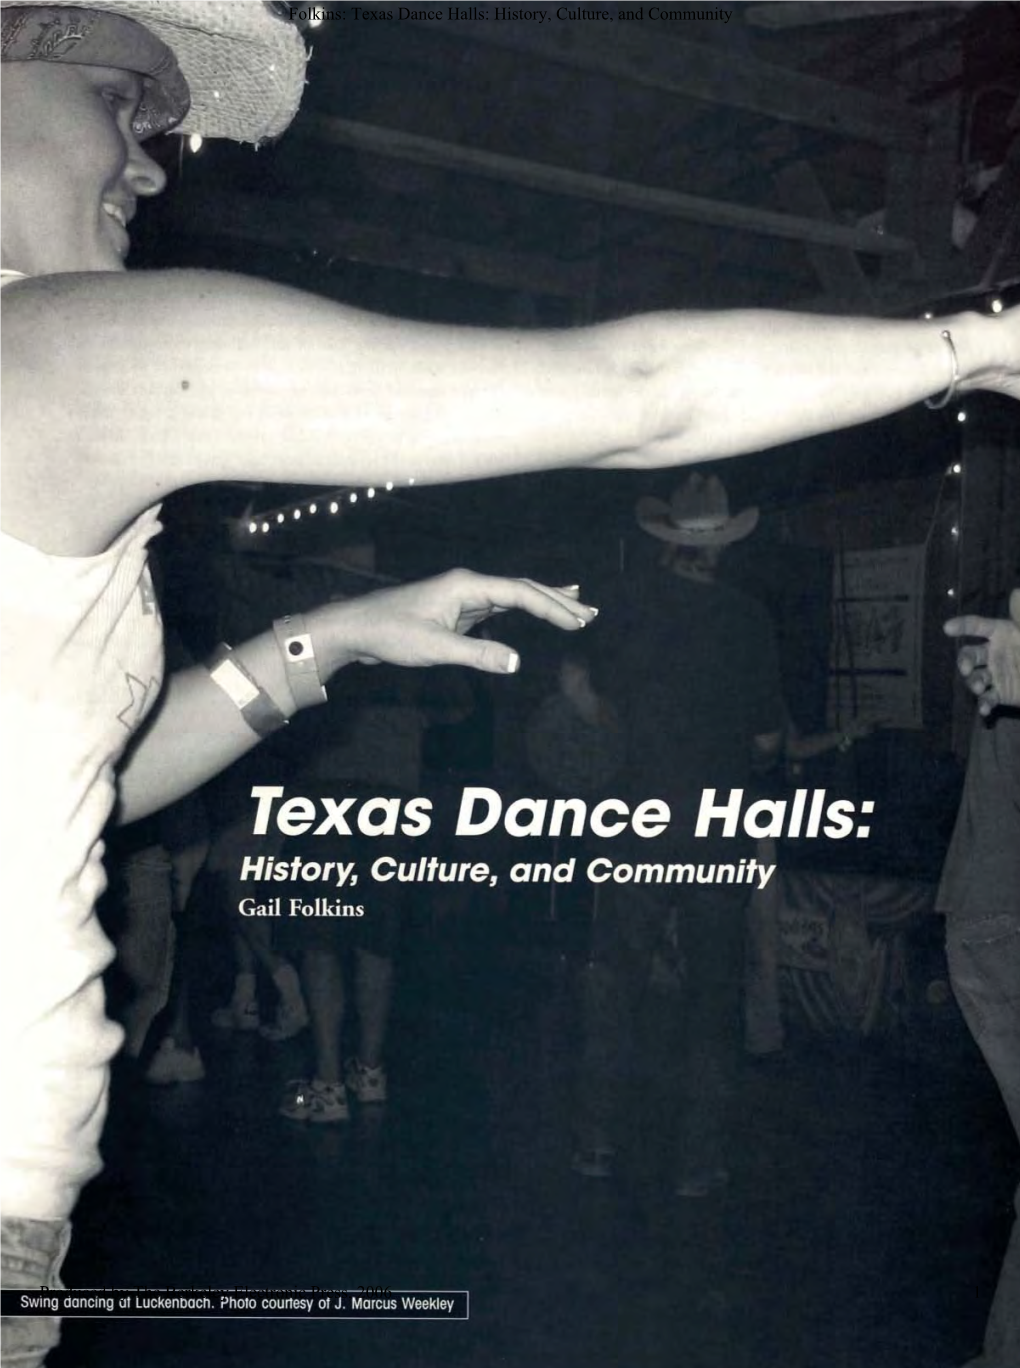 Texas Dance Halls: History, Culture, and Community